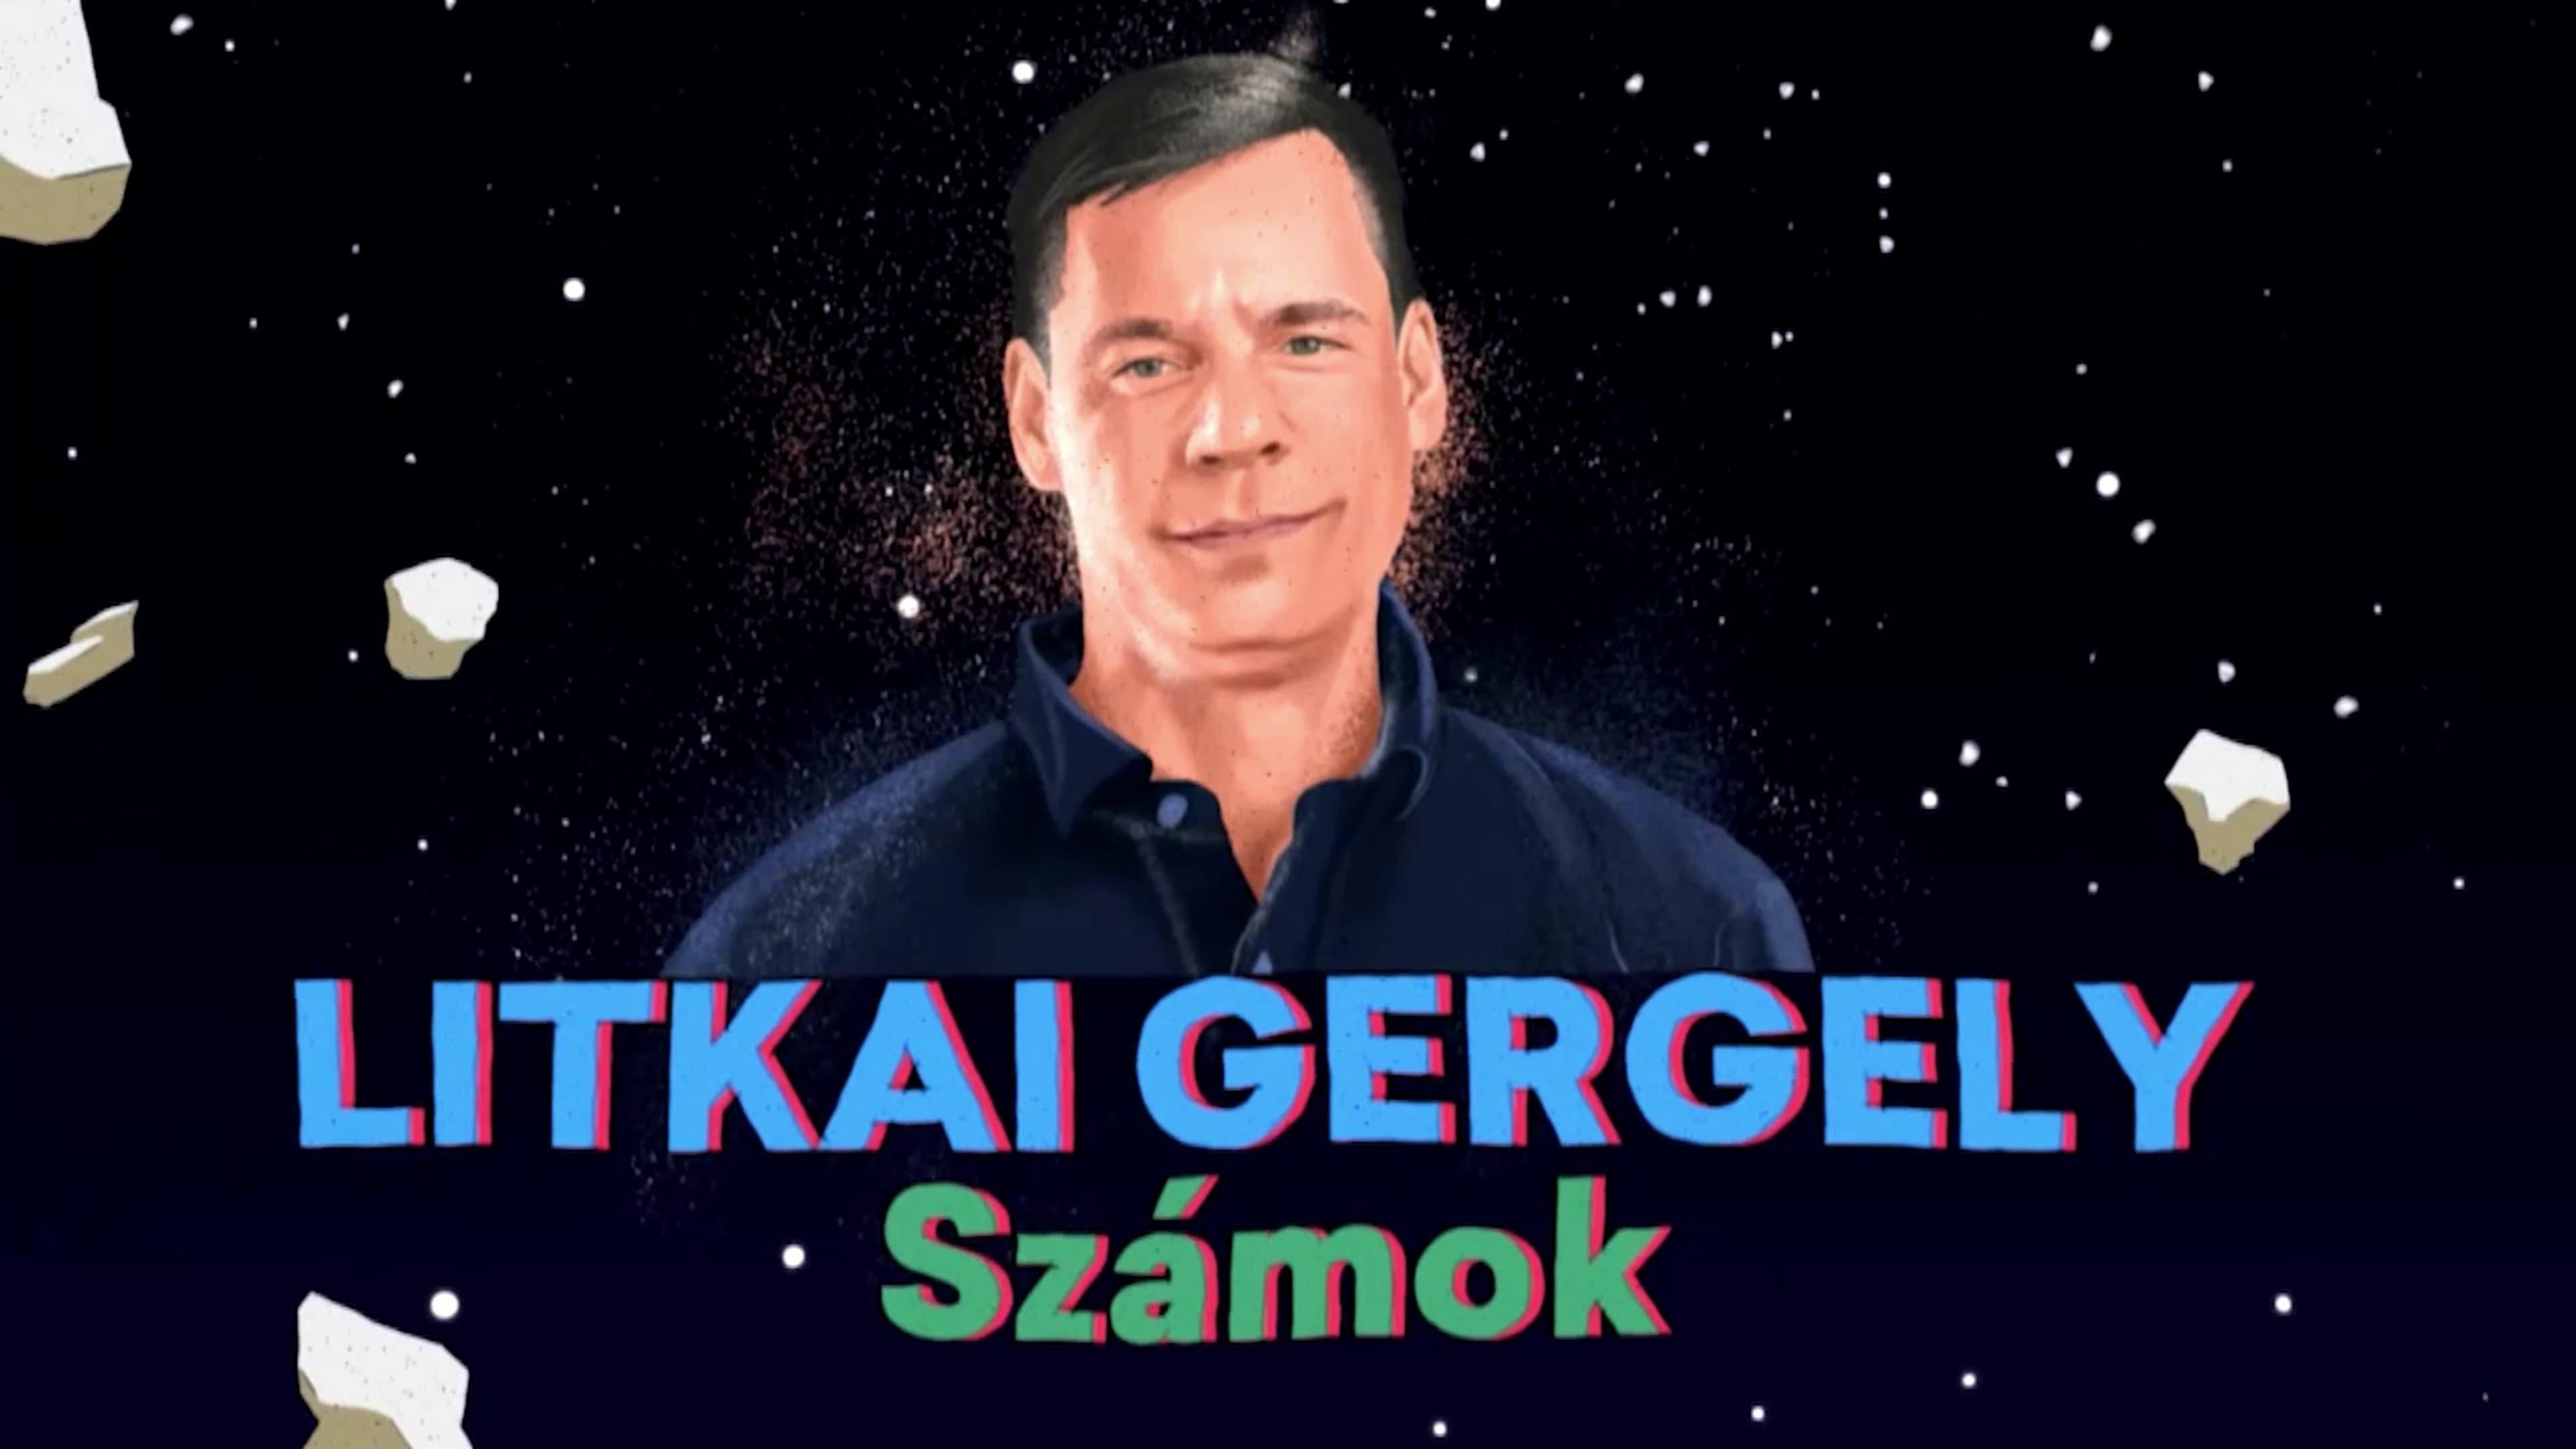 Számok - Litkai Gergely - CC Comedy Club backdrop